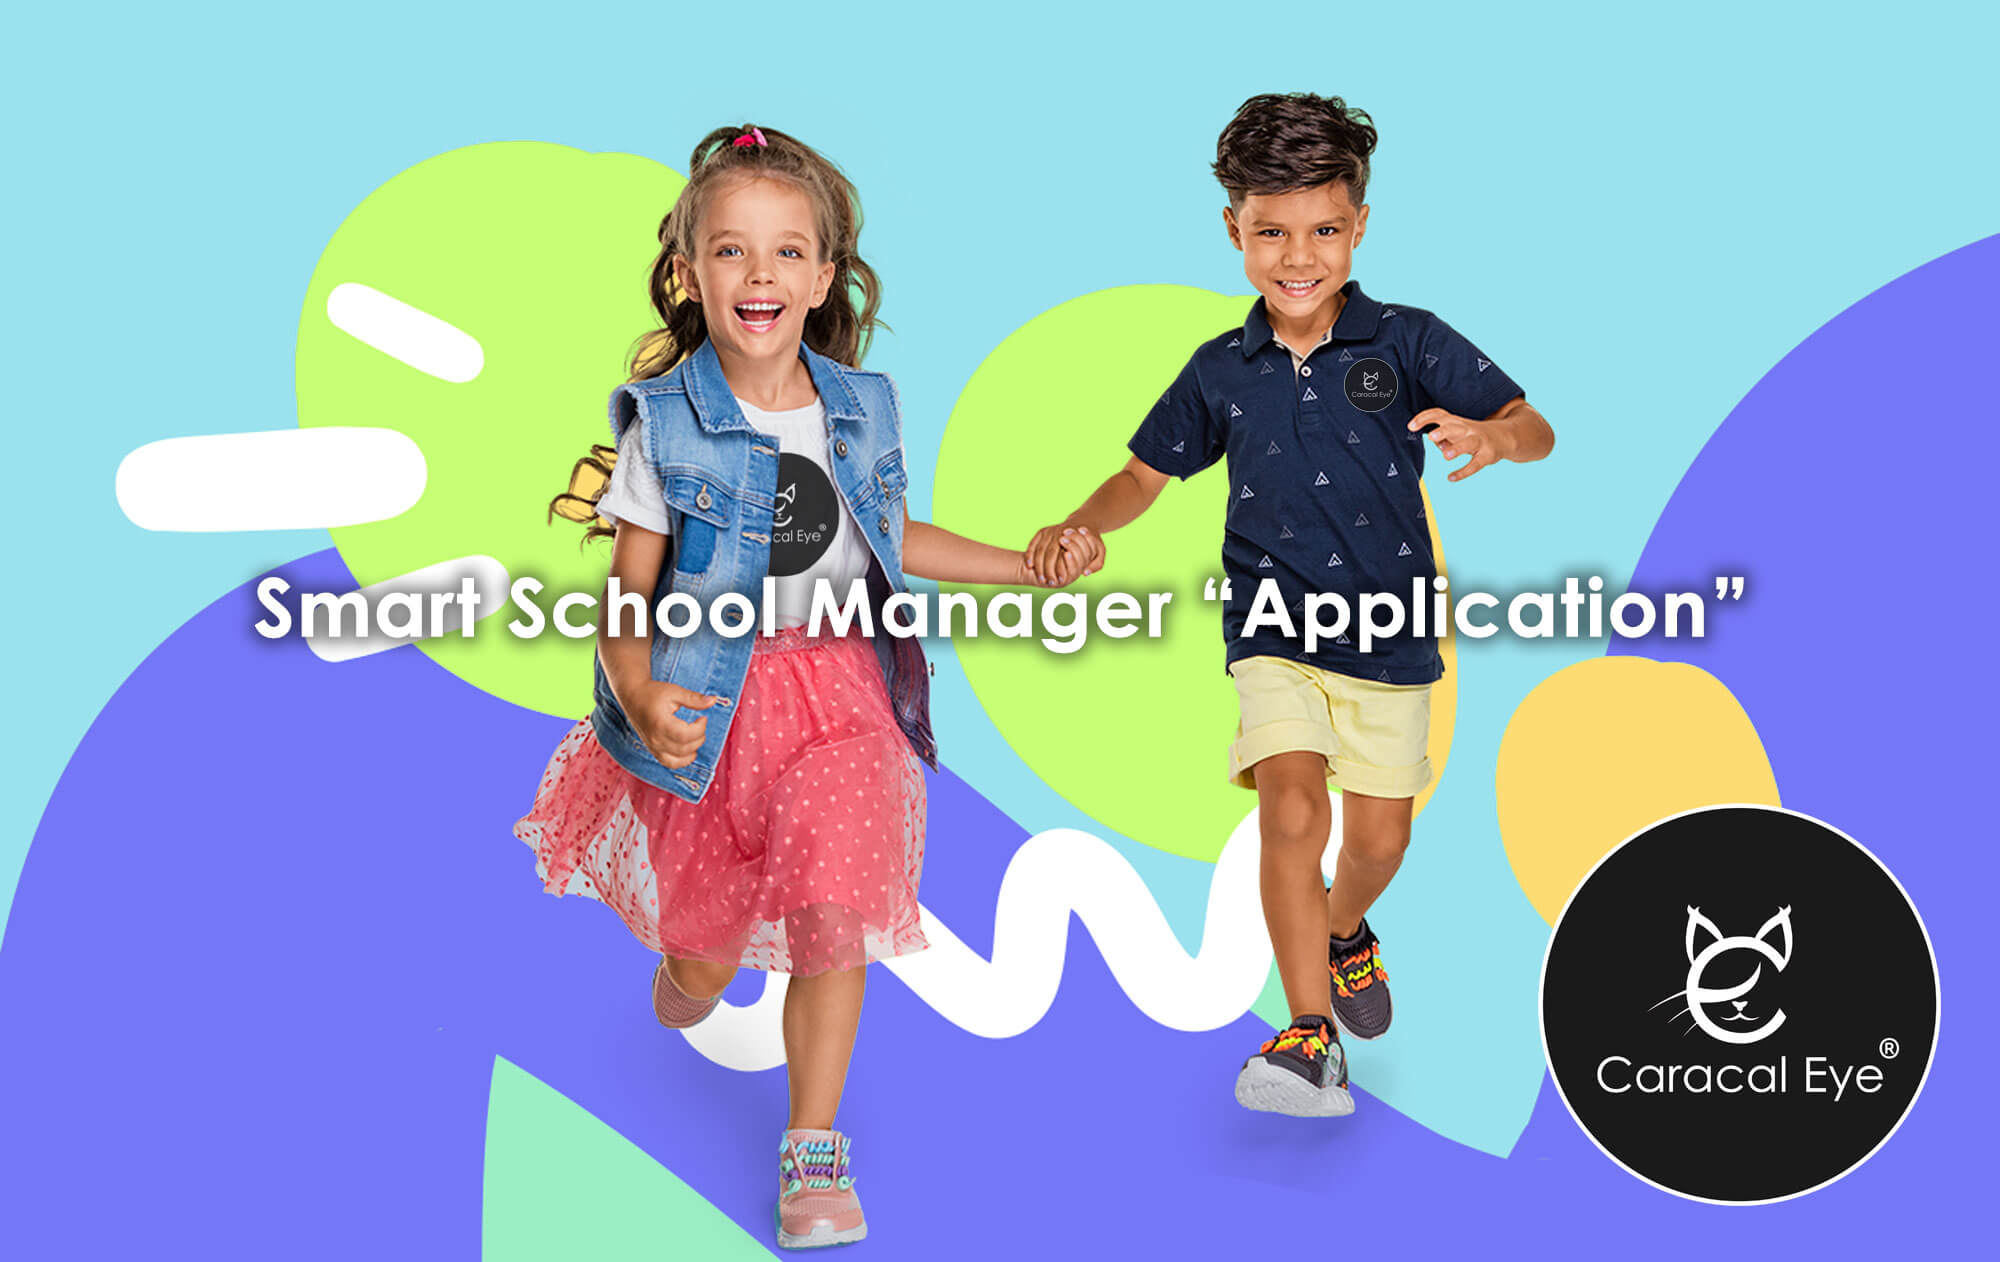 Smart School Manager “Application” Part 2